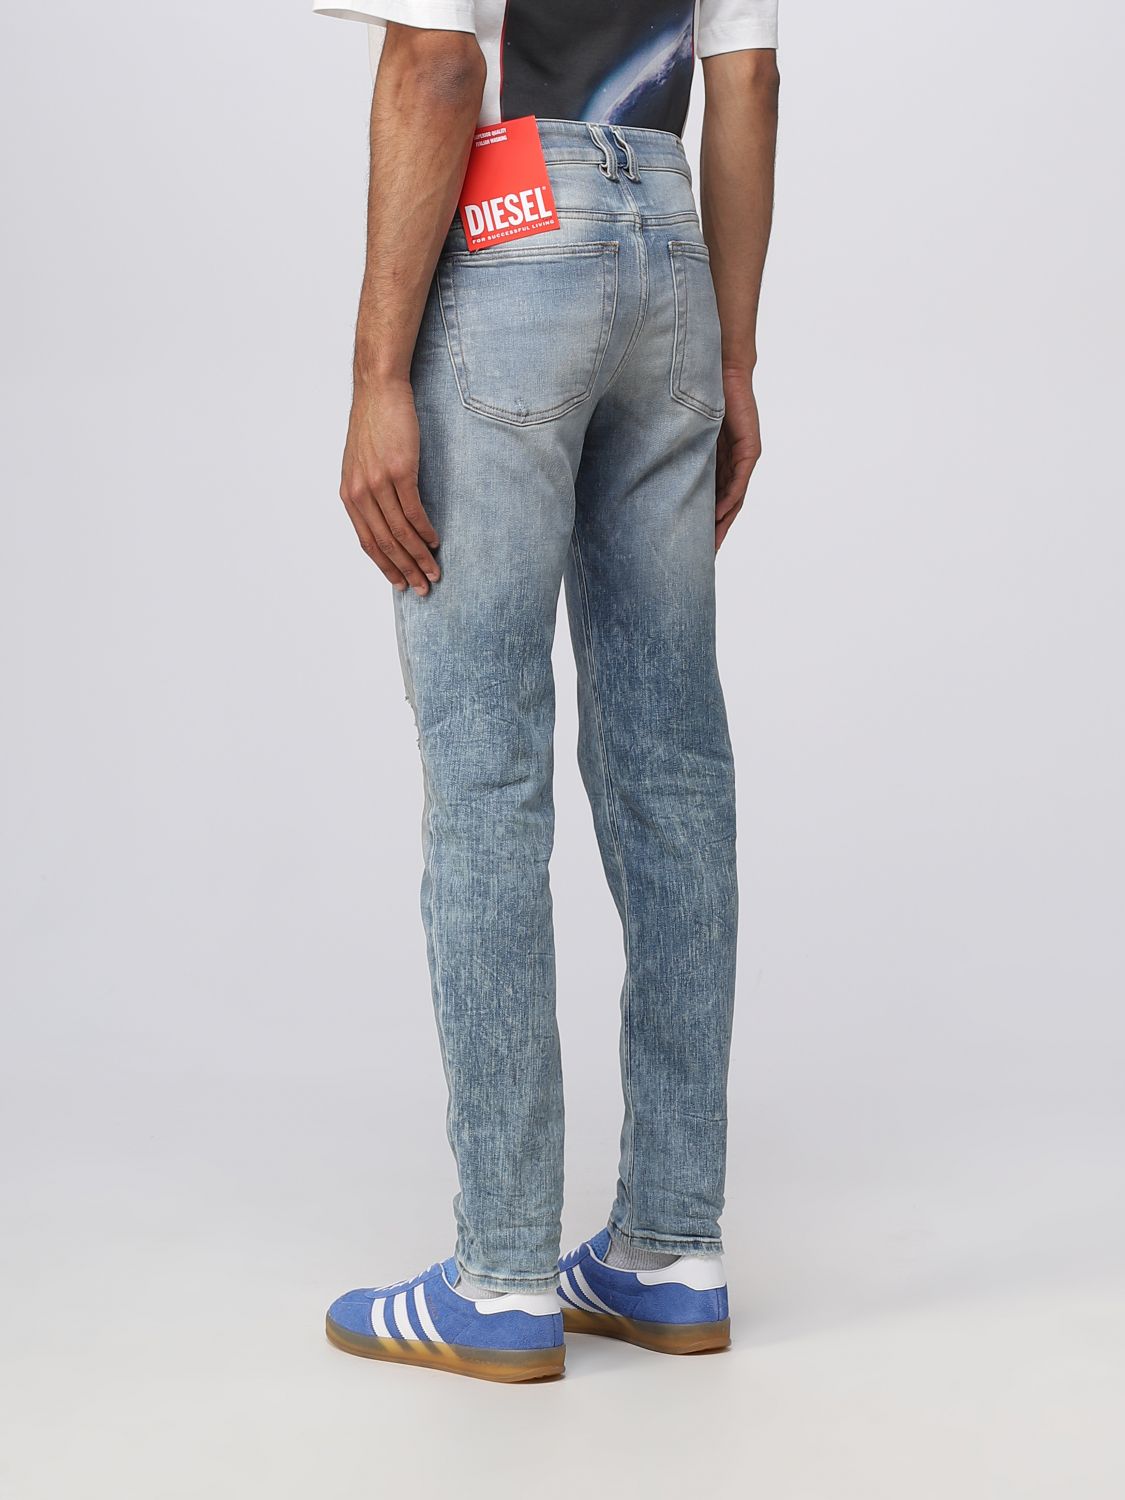 plakboek Whitney Productie DIESEL: jeans for man - Denim | Diesel jeans A0359509F08 online on  GIGLIO.COM